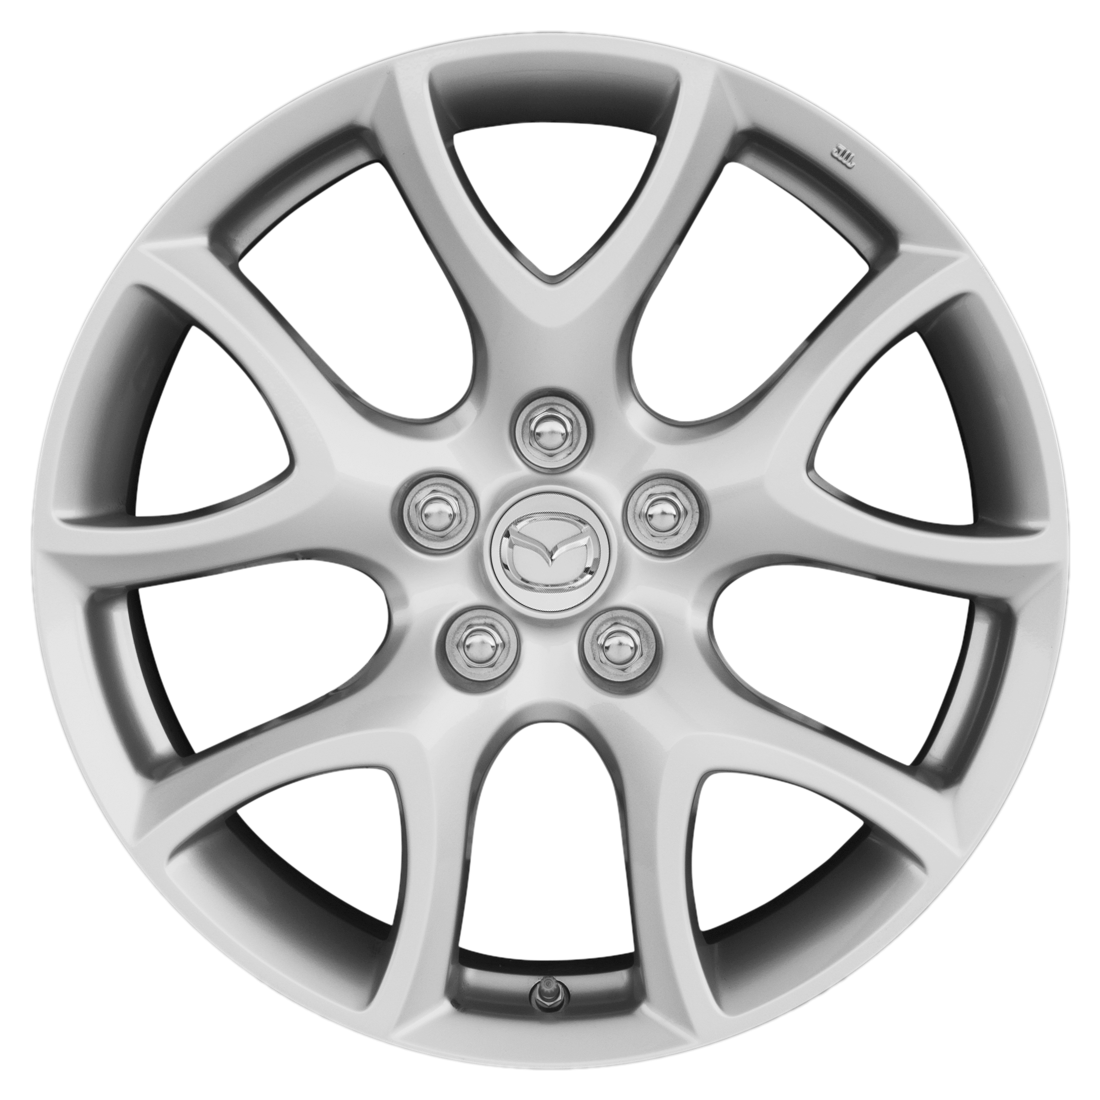 Mazdaspeed3 OEM Silver Alloy Rims - 18" | Mazdaspeed3 (2010-2013)